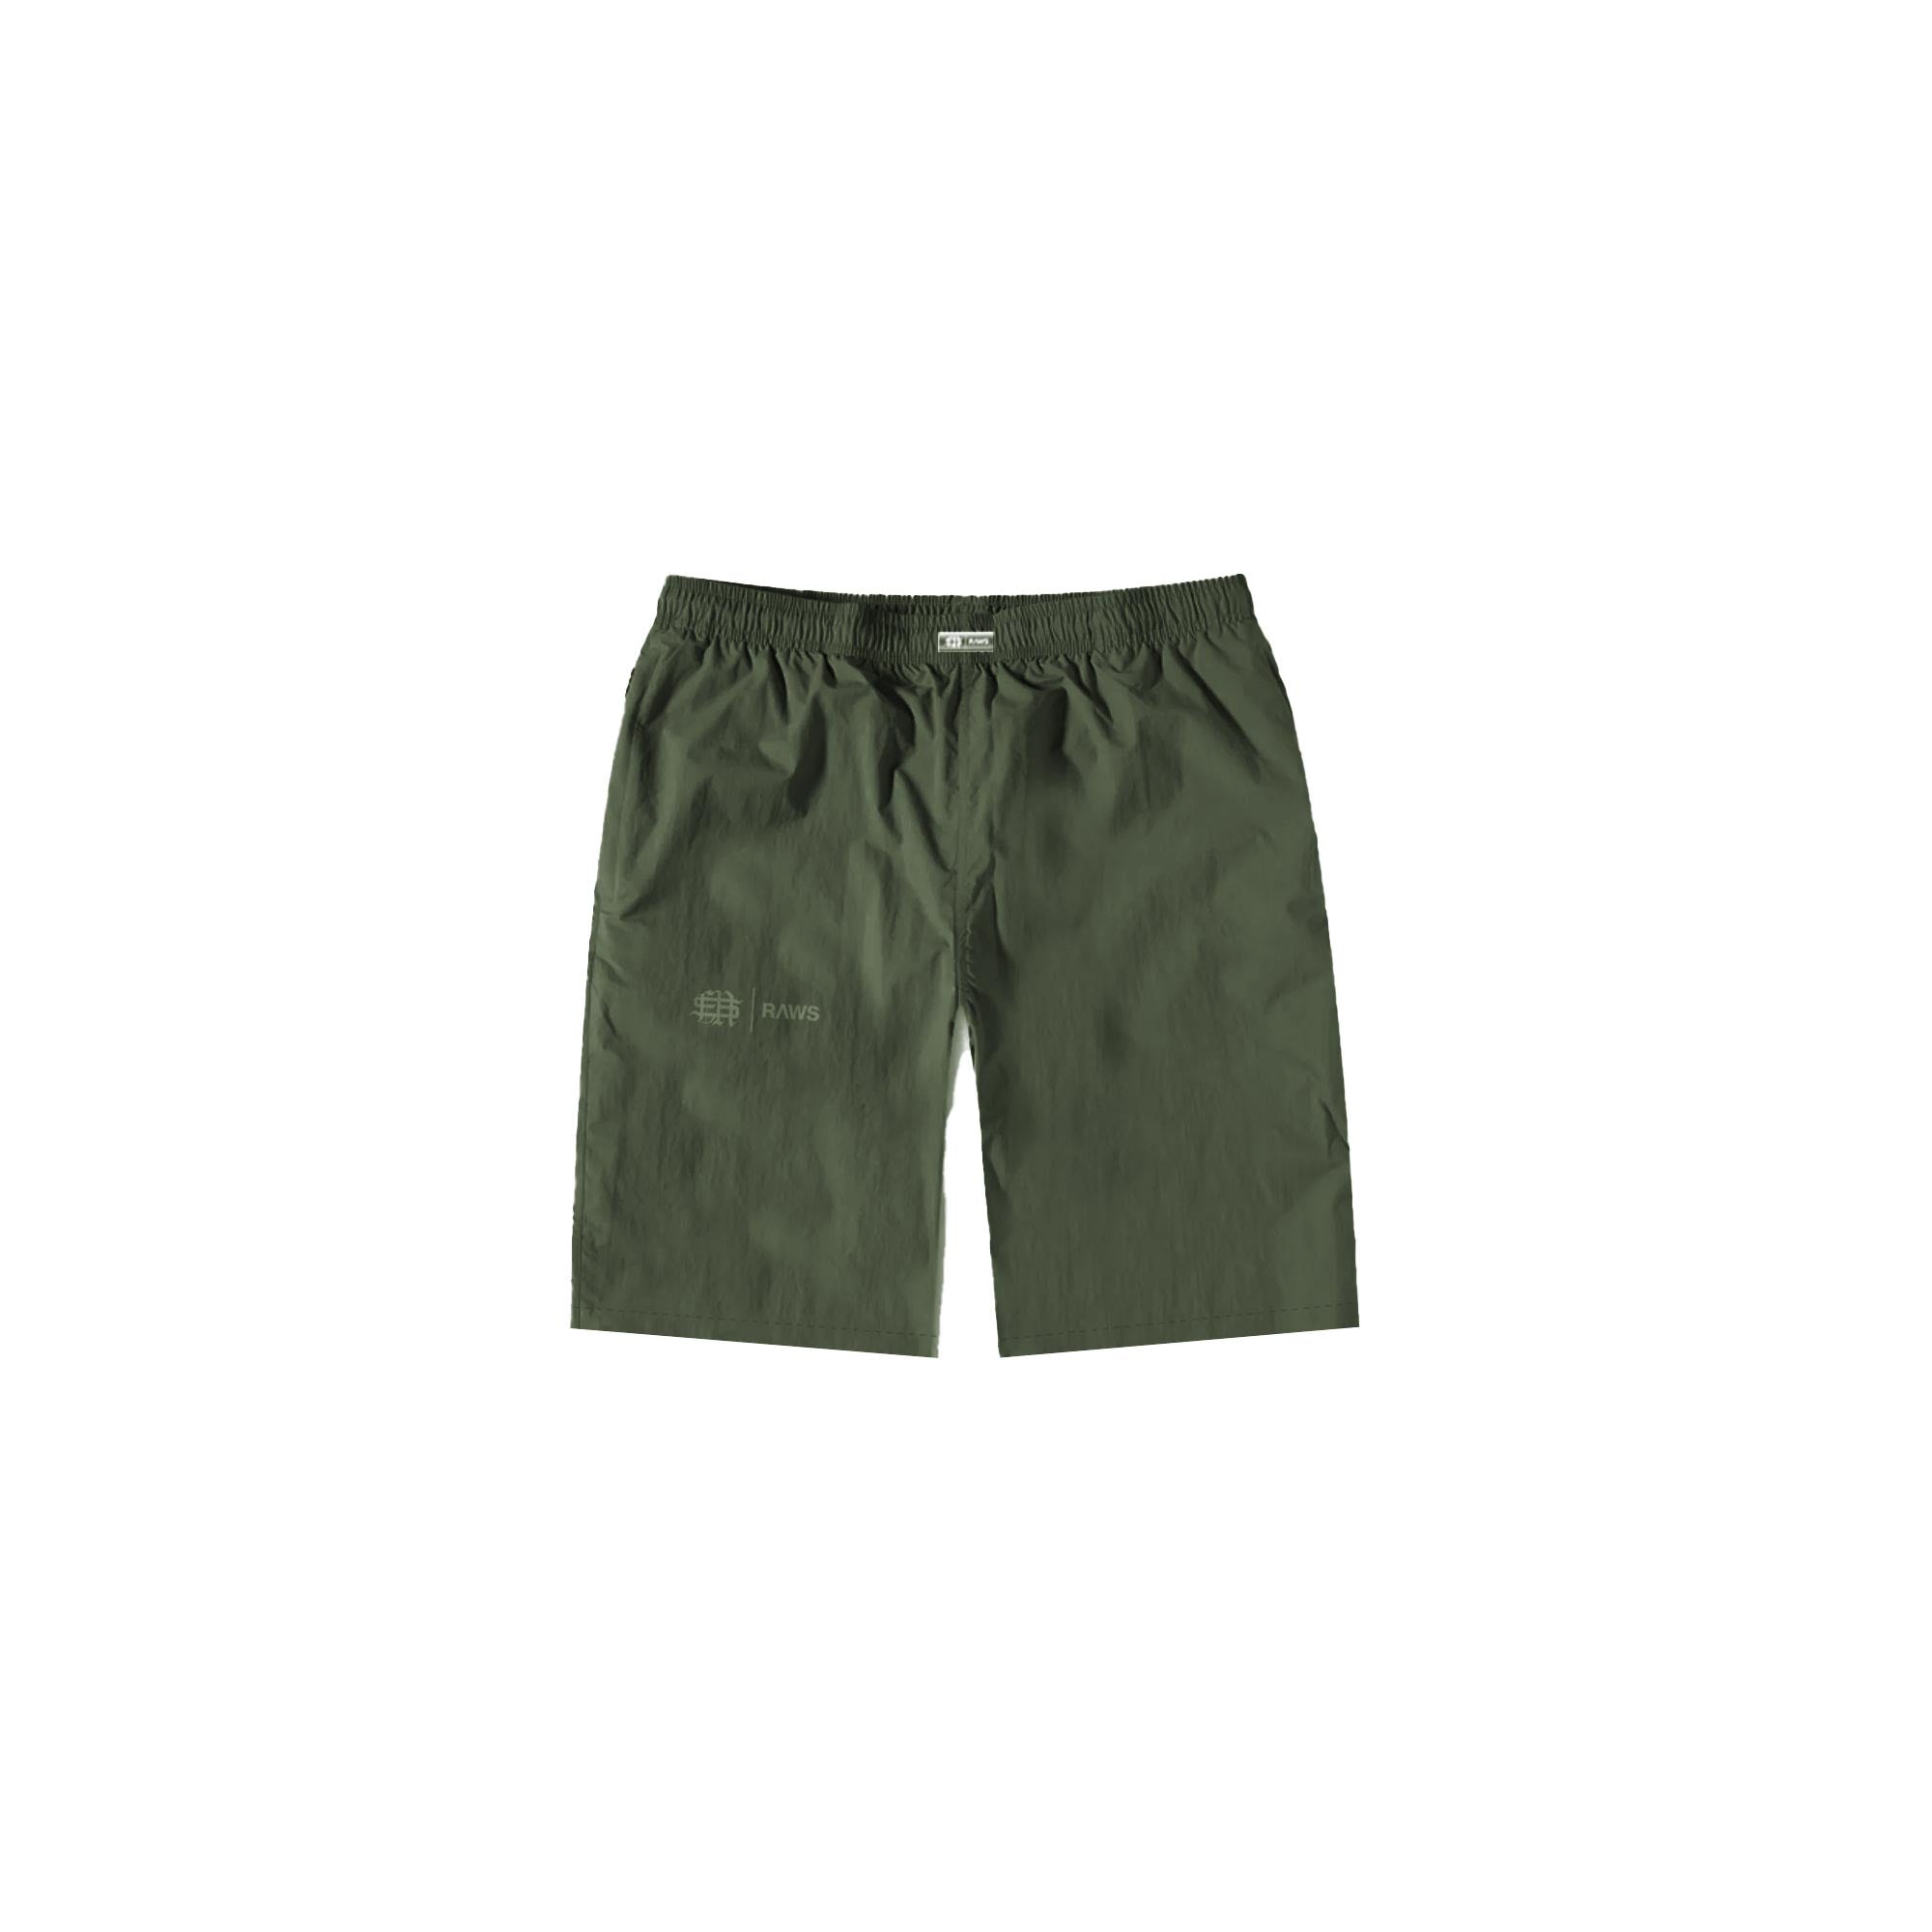 Sole et. Al RAWS Warm Up Track Shorts : Khaki grønn